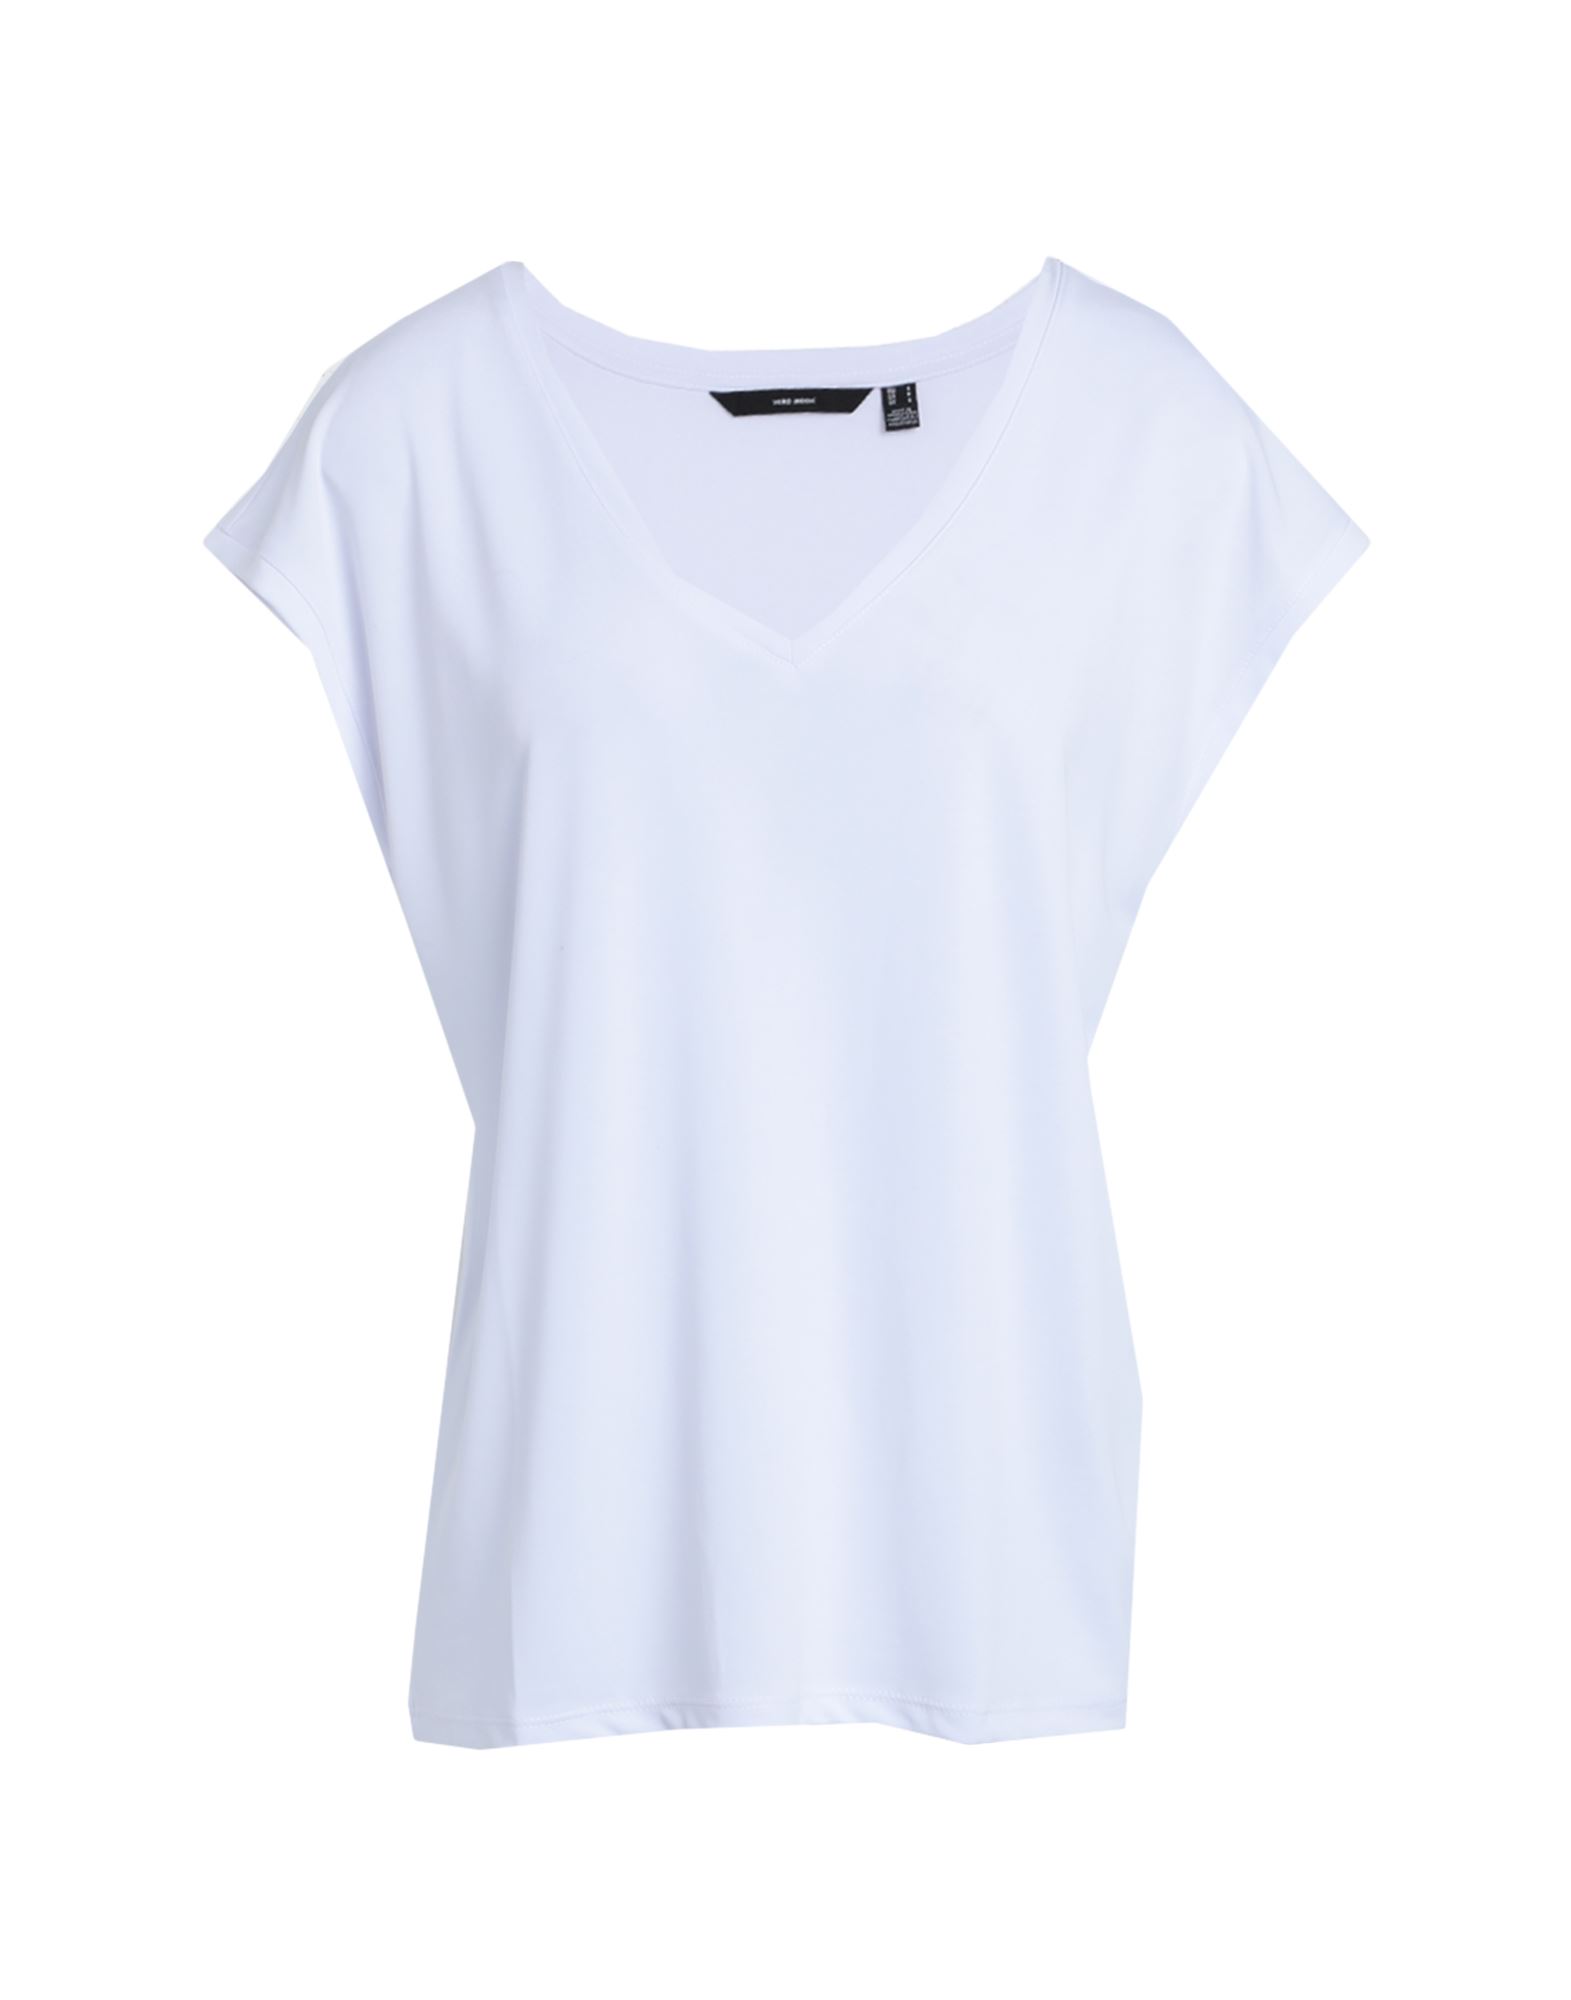 Vero Moda T-shirts In White